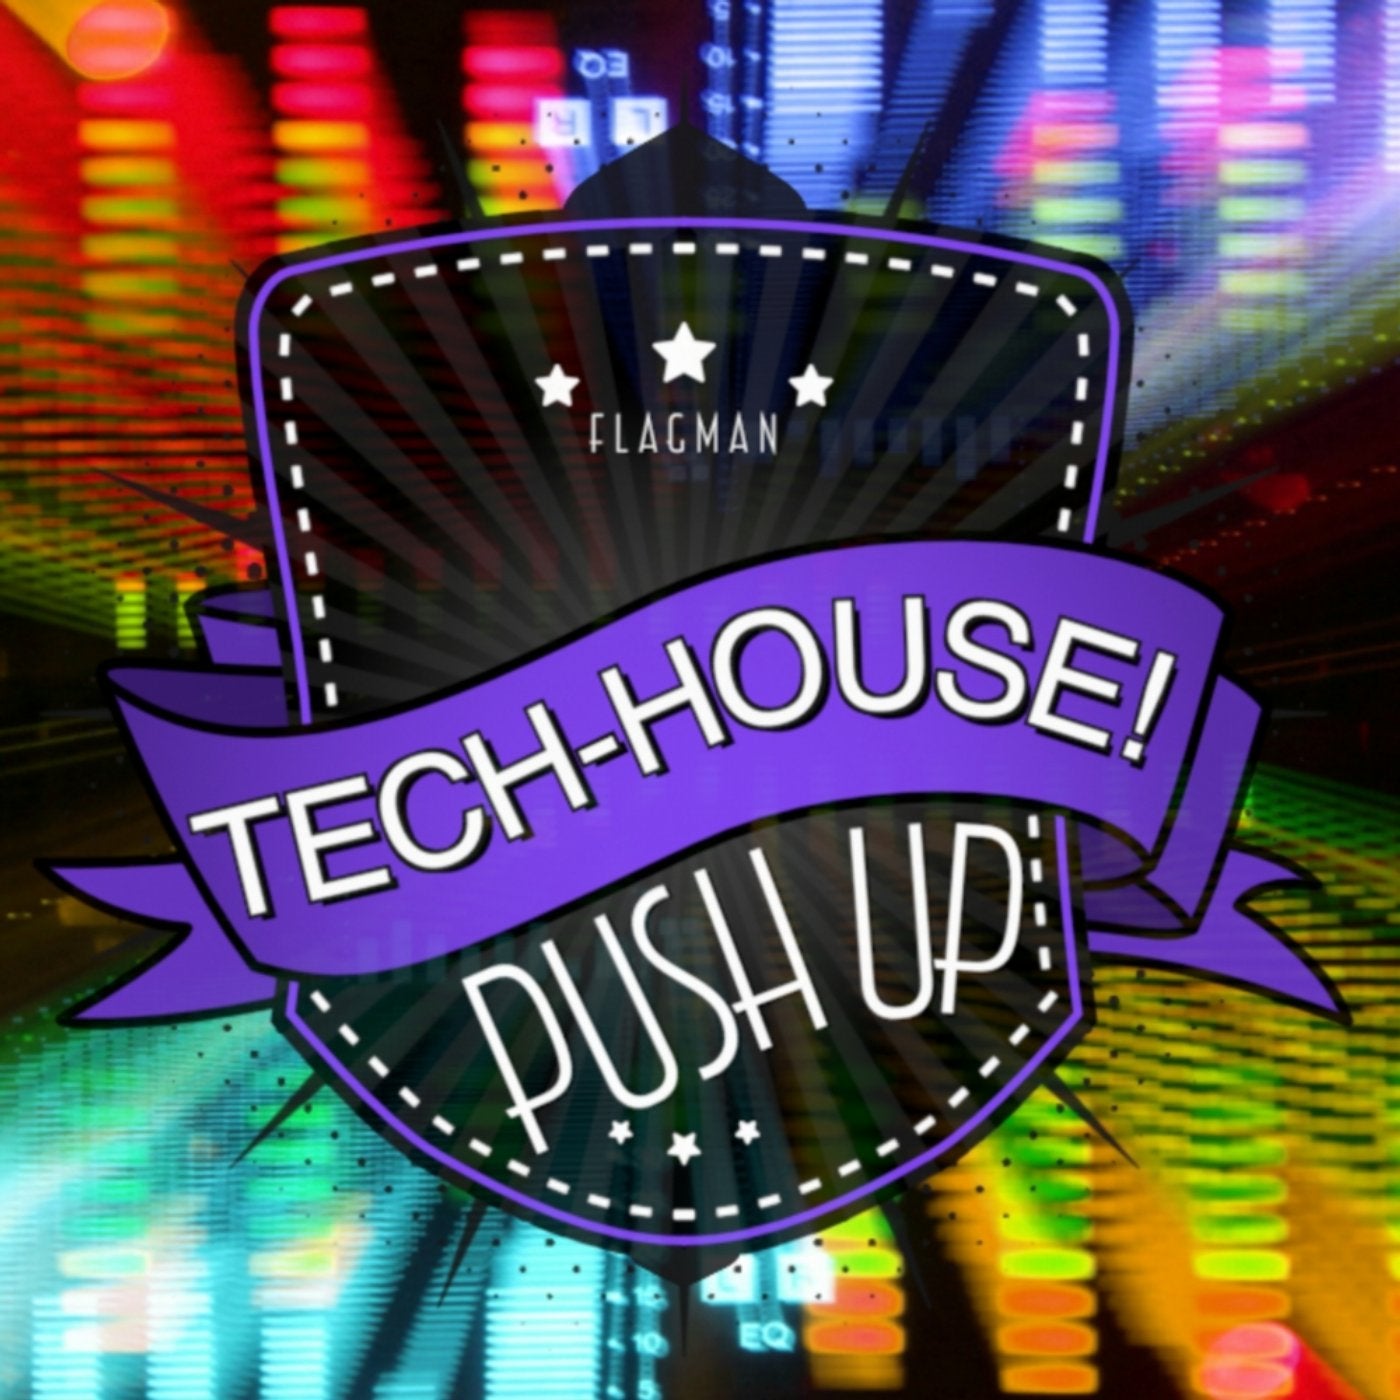 Push Up Tech-House!